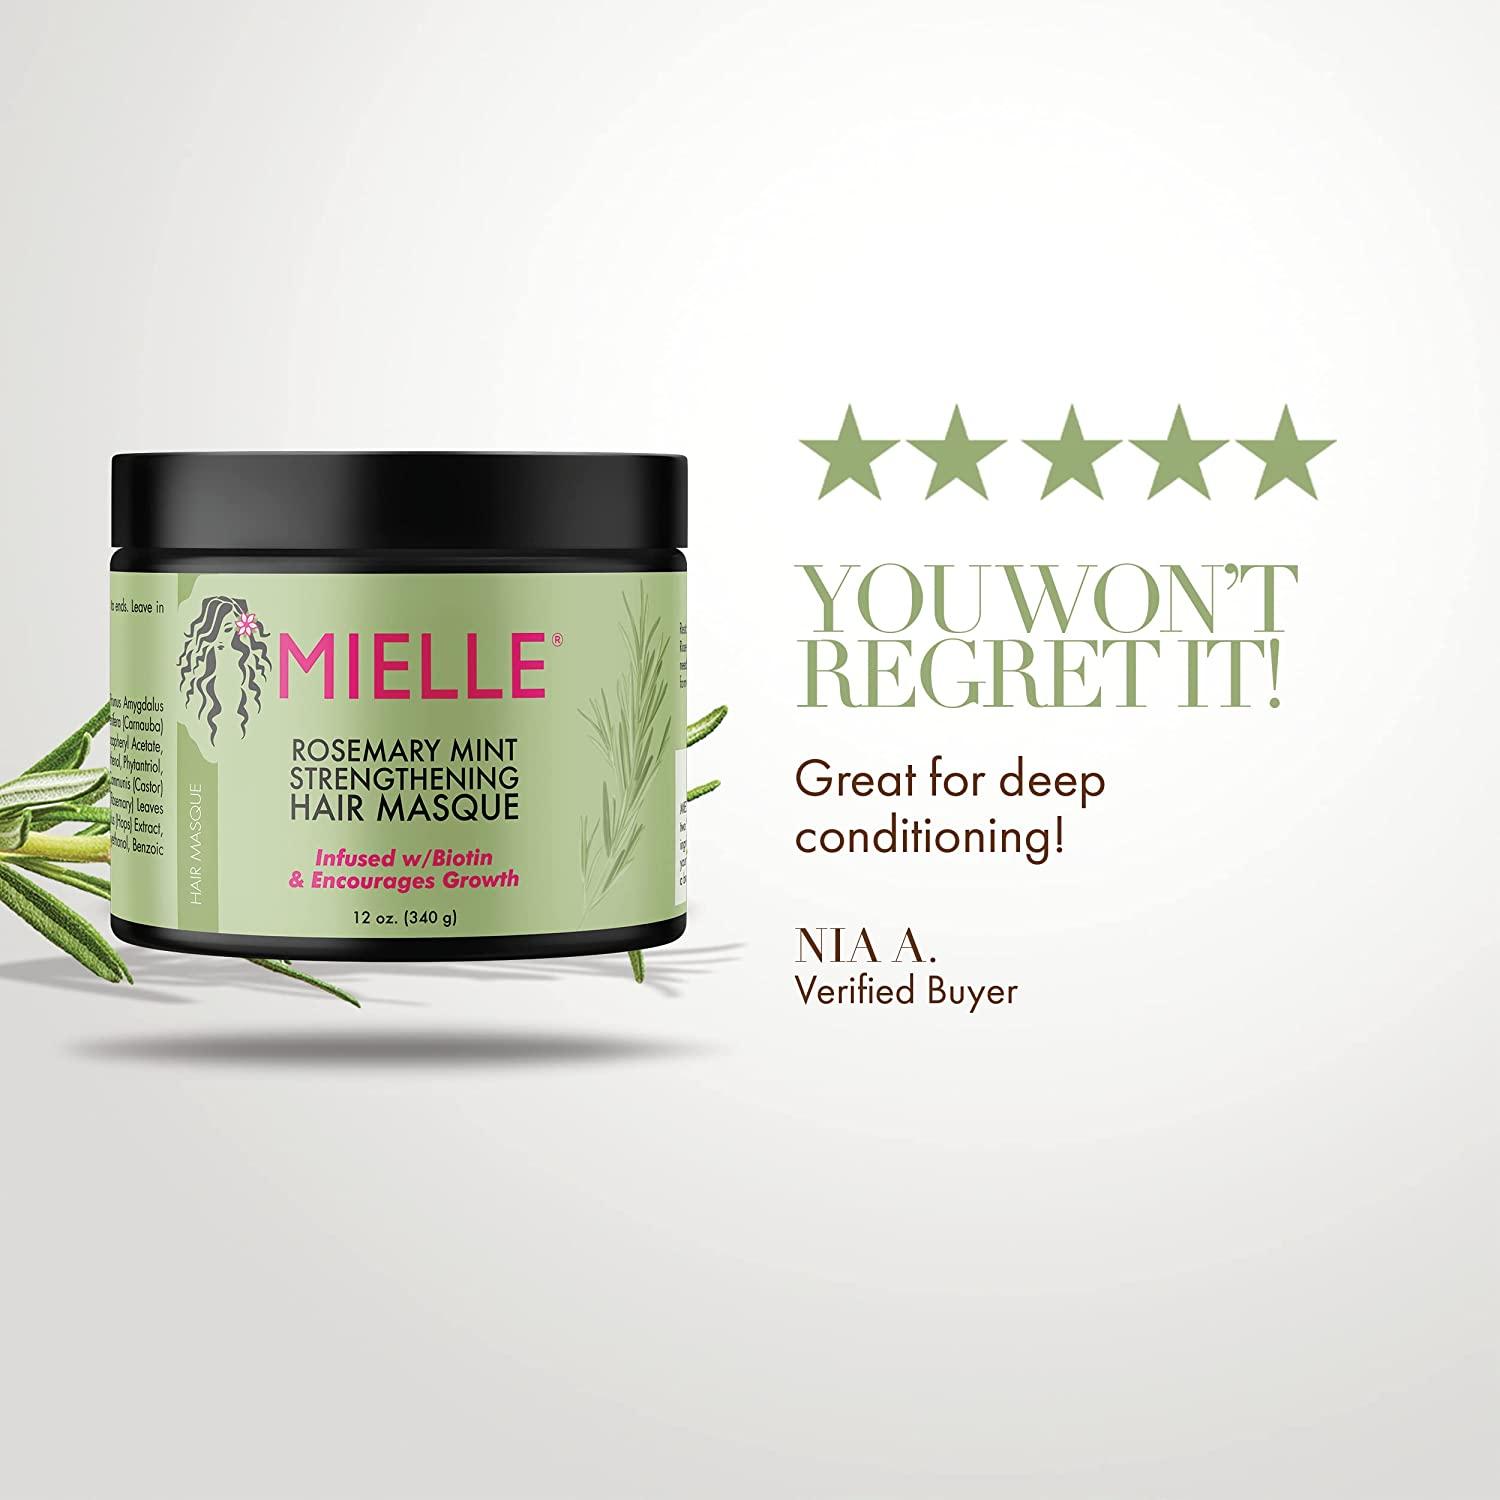 Mielle Hair Masque, Rosemary Mint, Strengthening - 12 oz